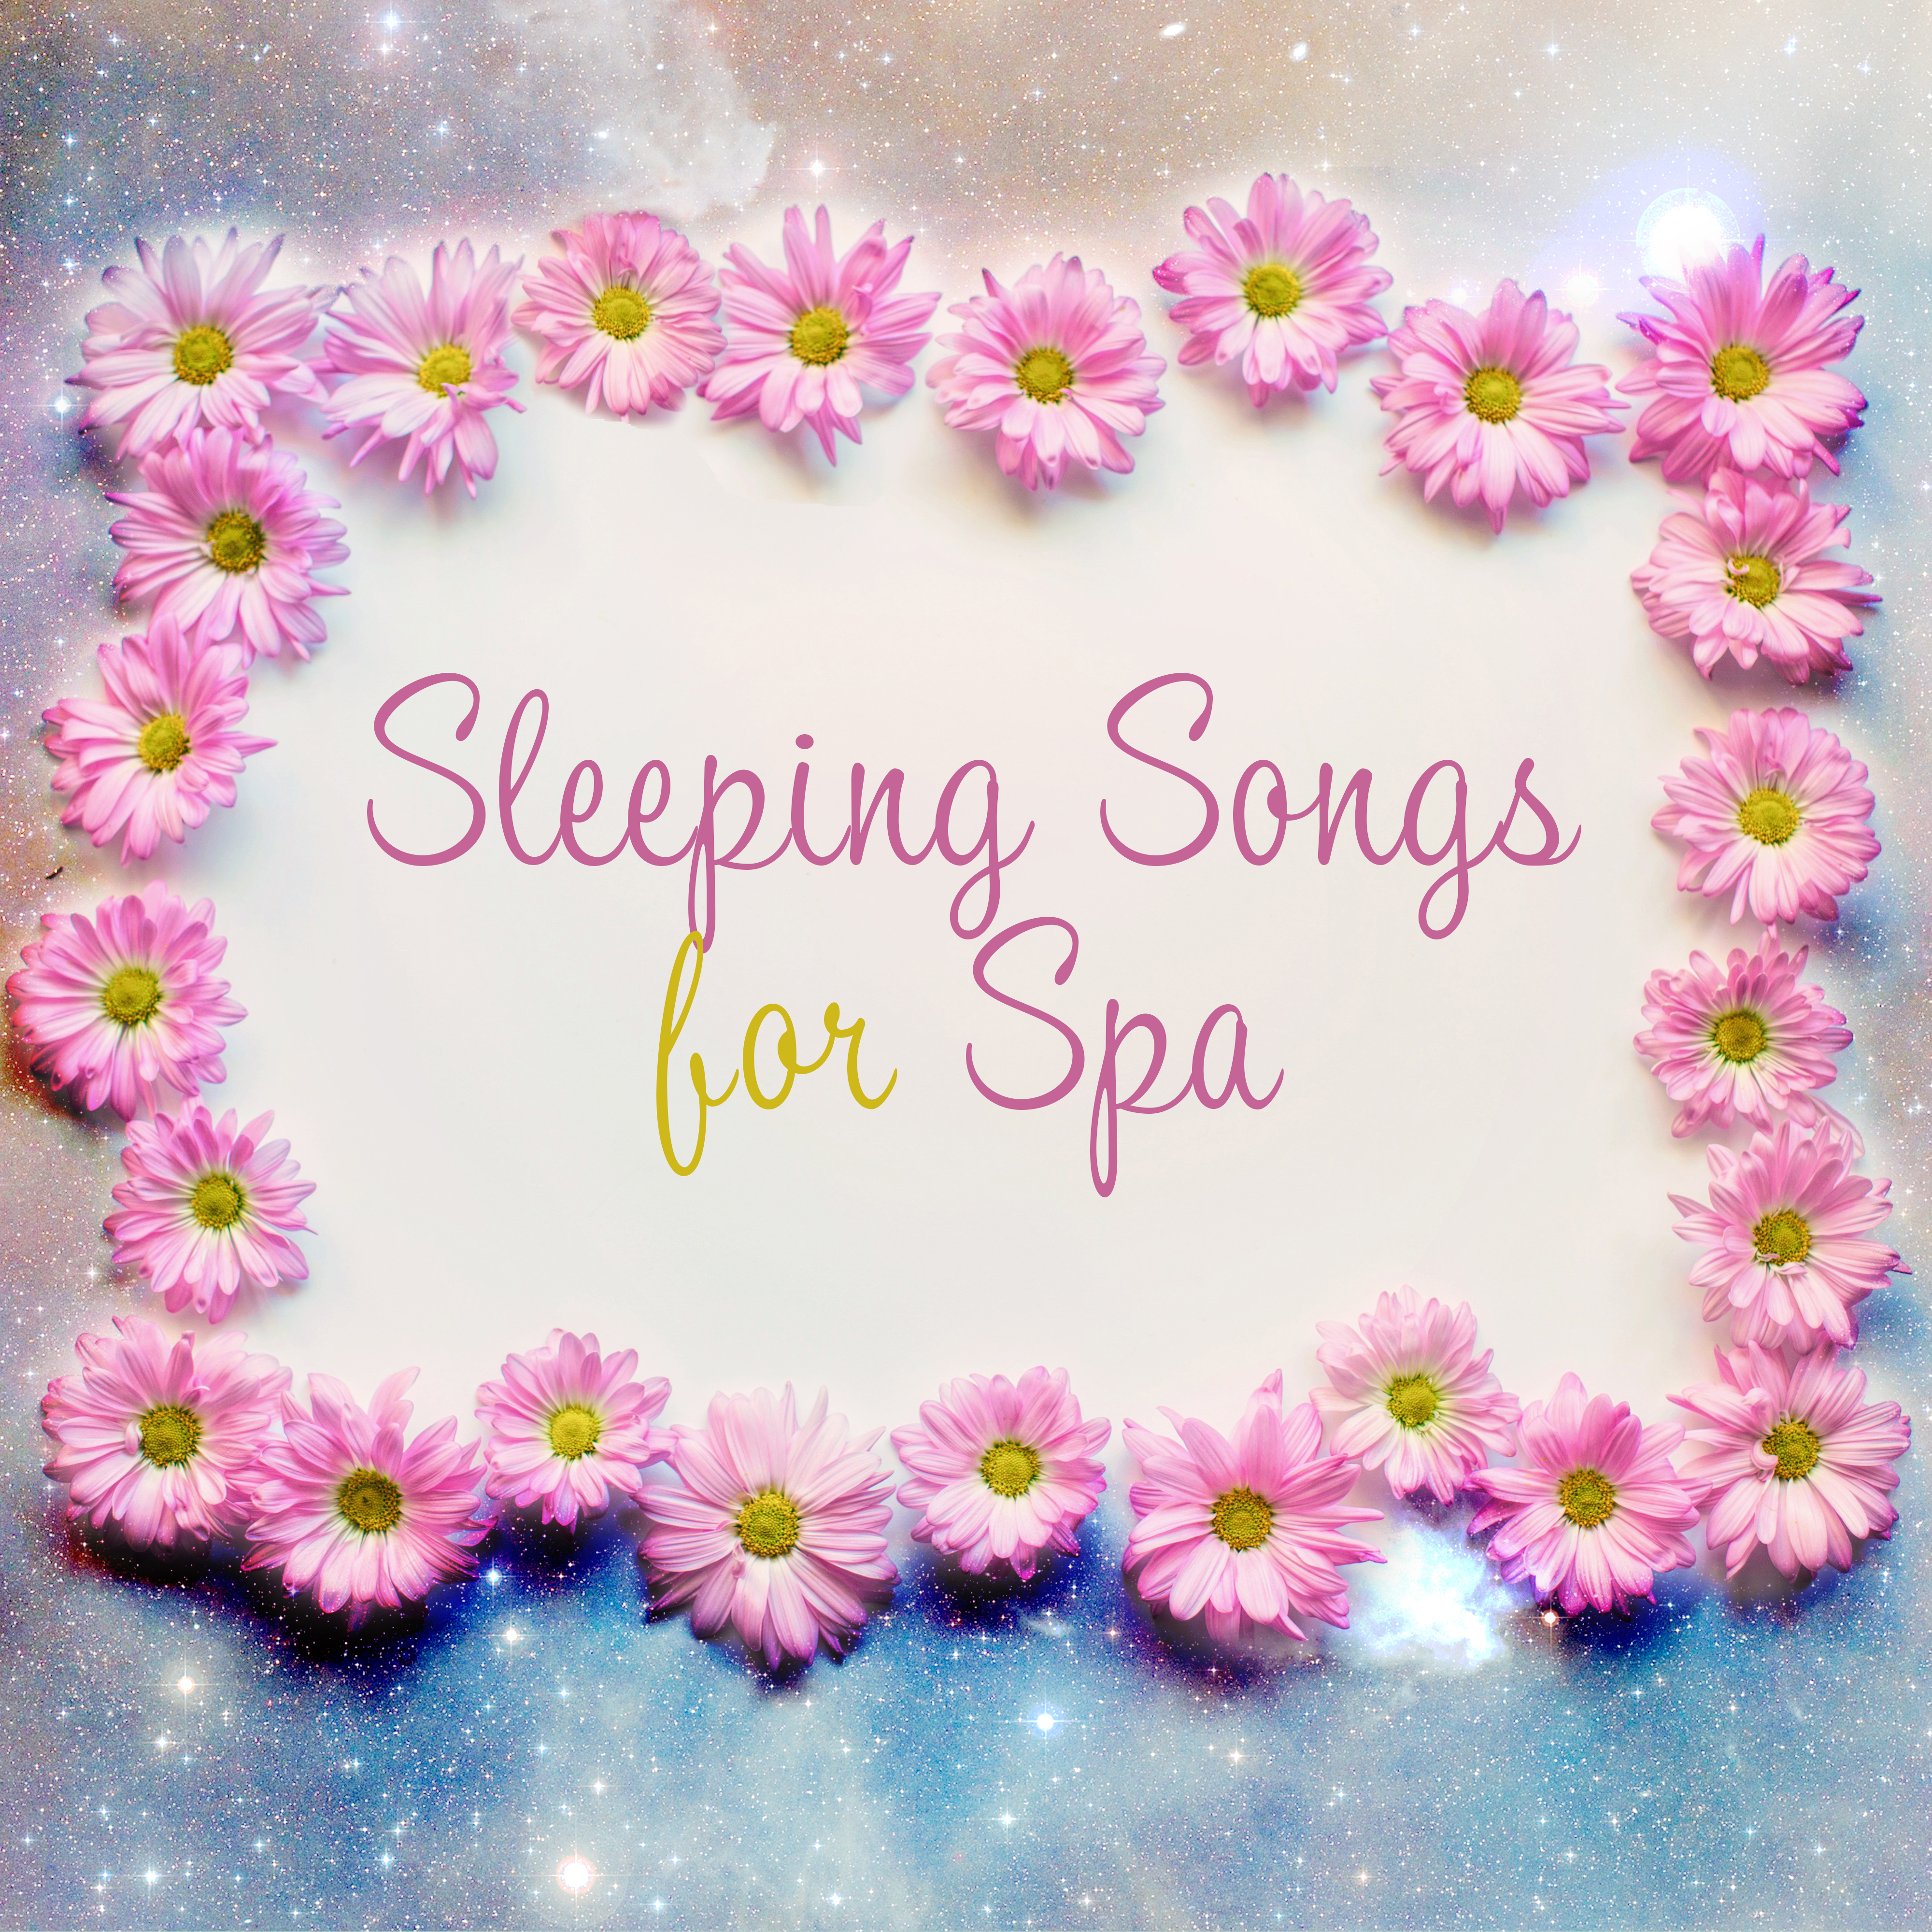 Sleeping Songs for Spa